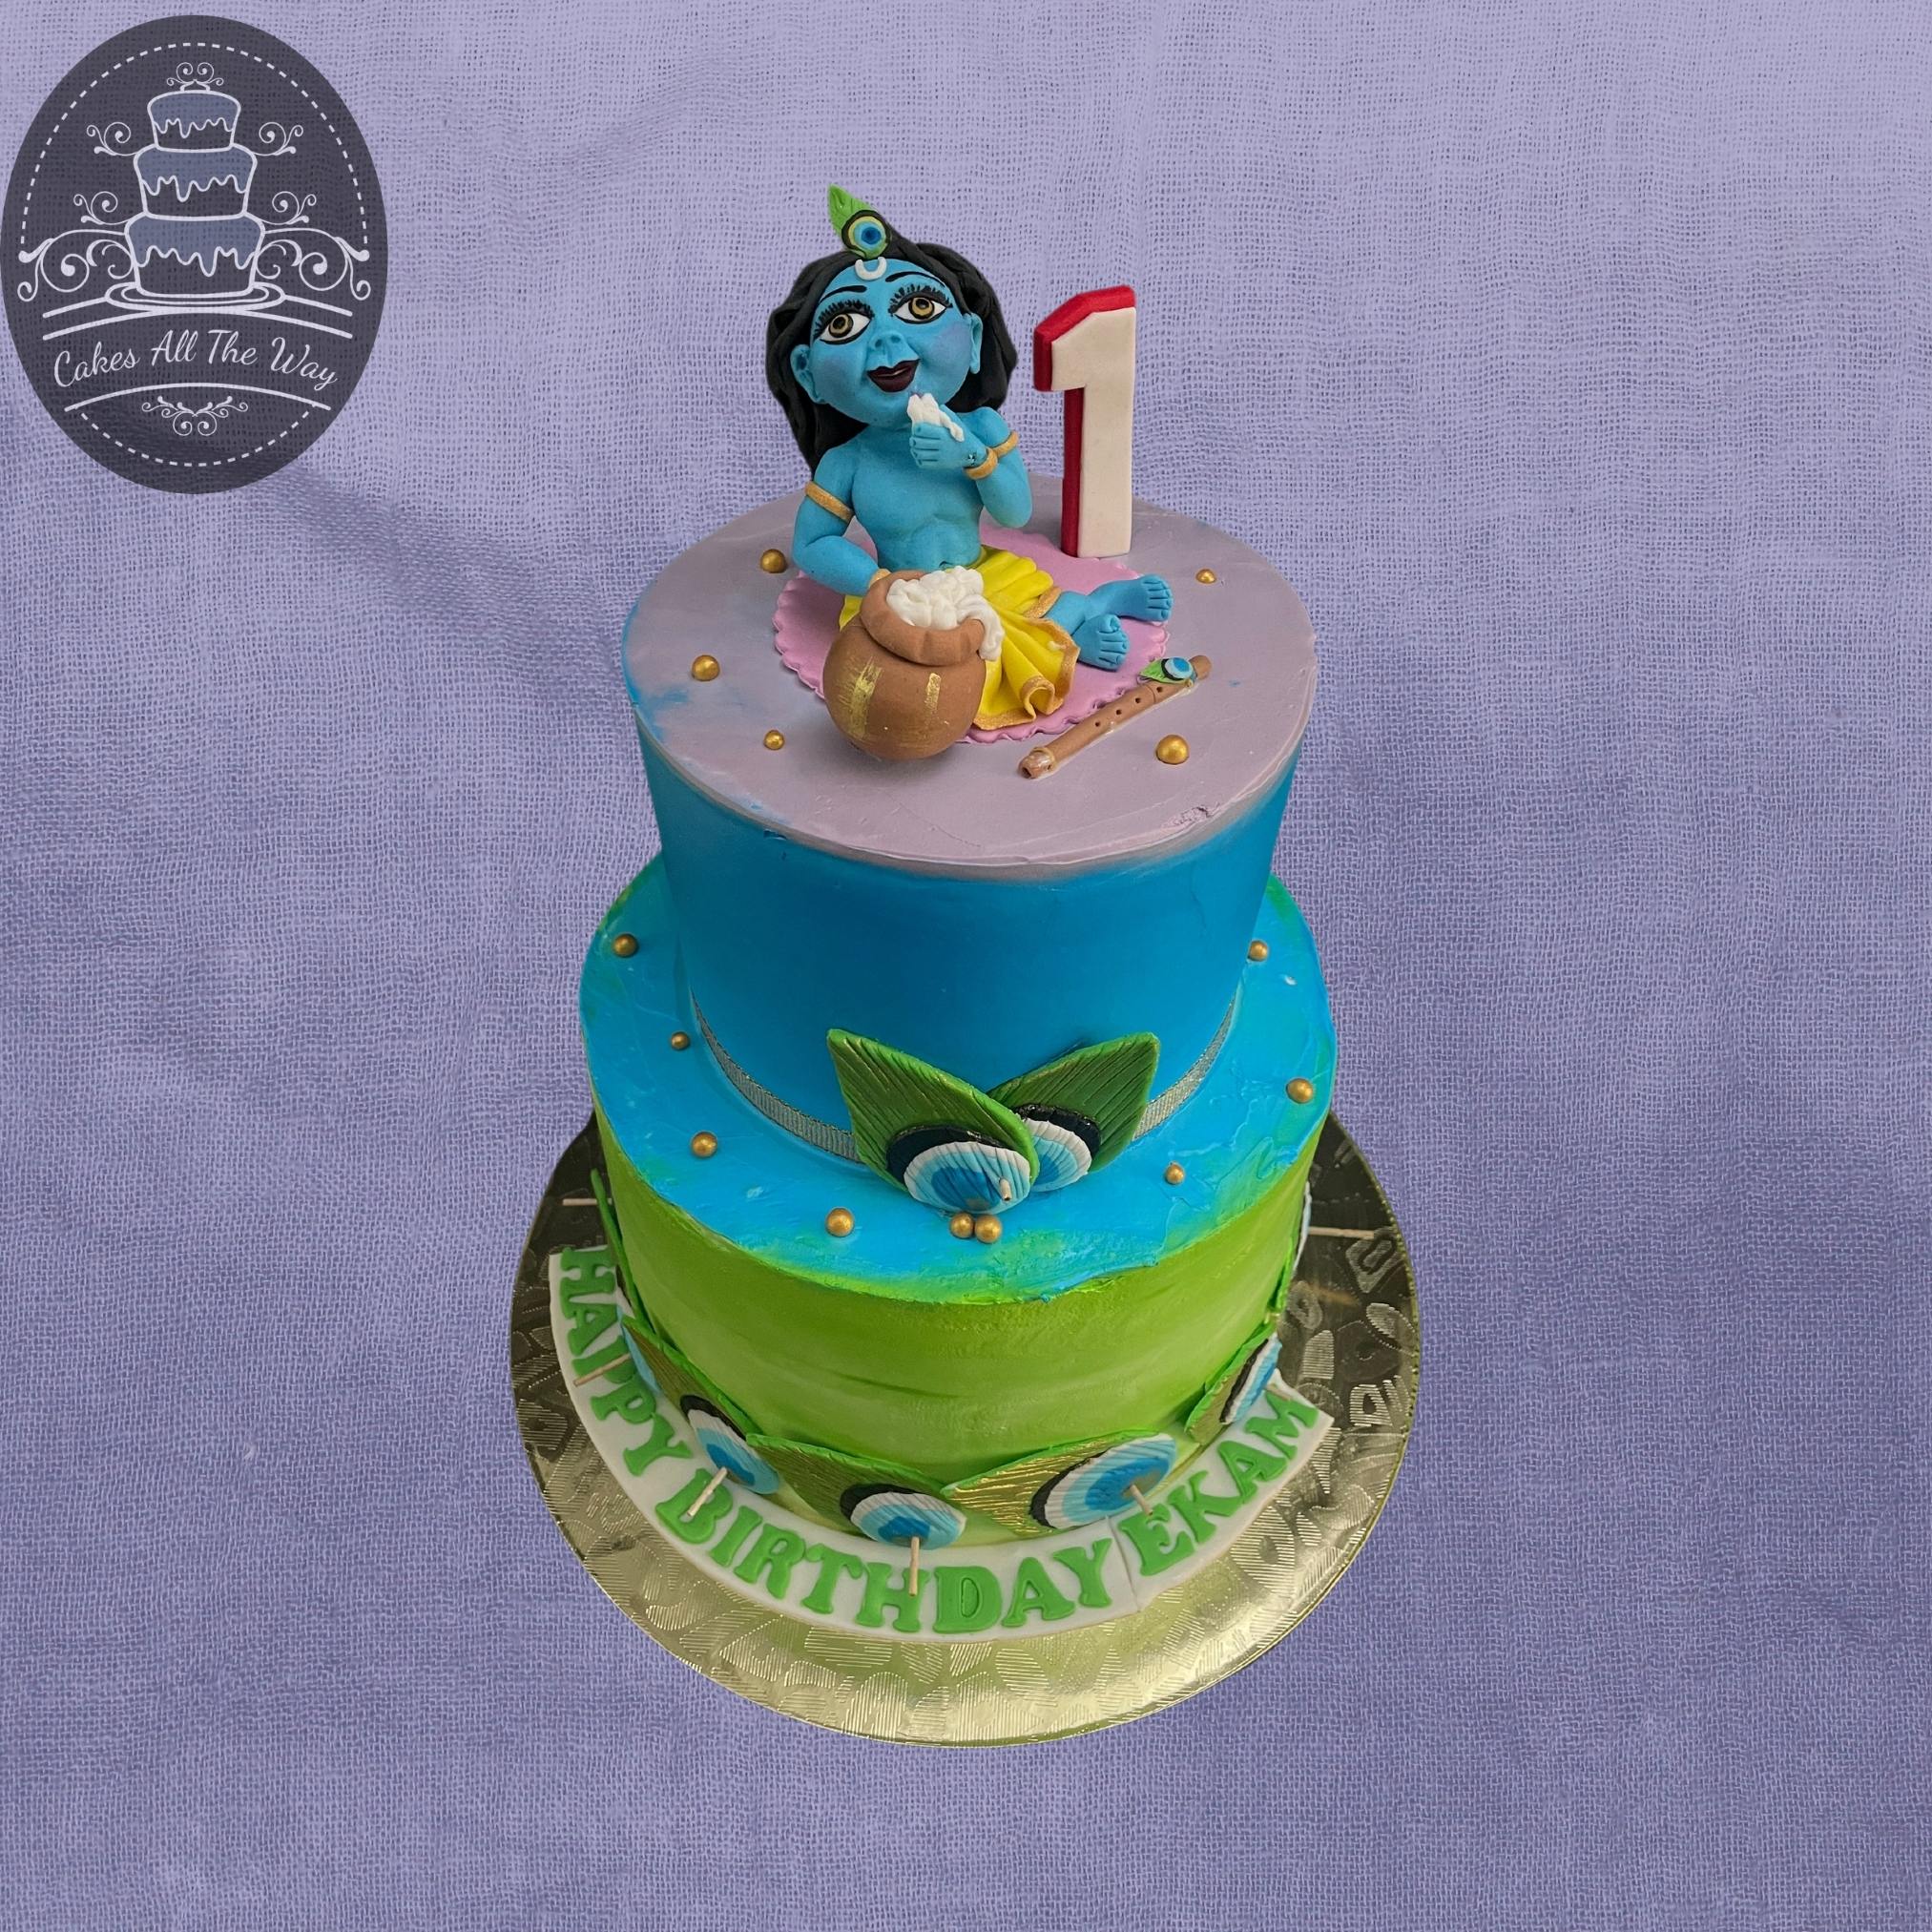 Buy/Send Krishna Cake Design Online @ Rs. 2099 - SendBestGift